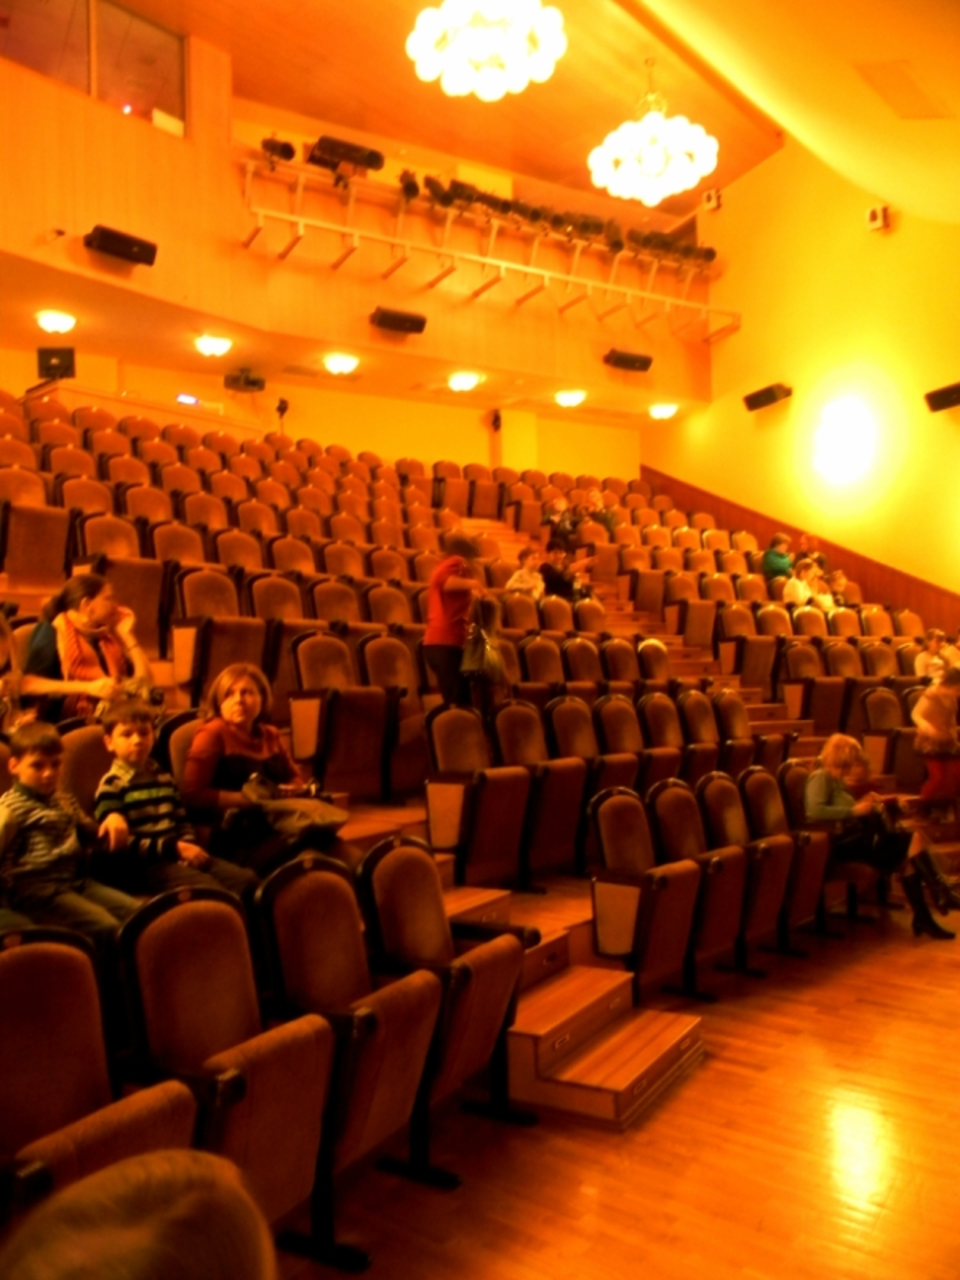 театр эстрады фото схема зала с местами